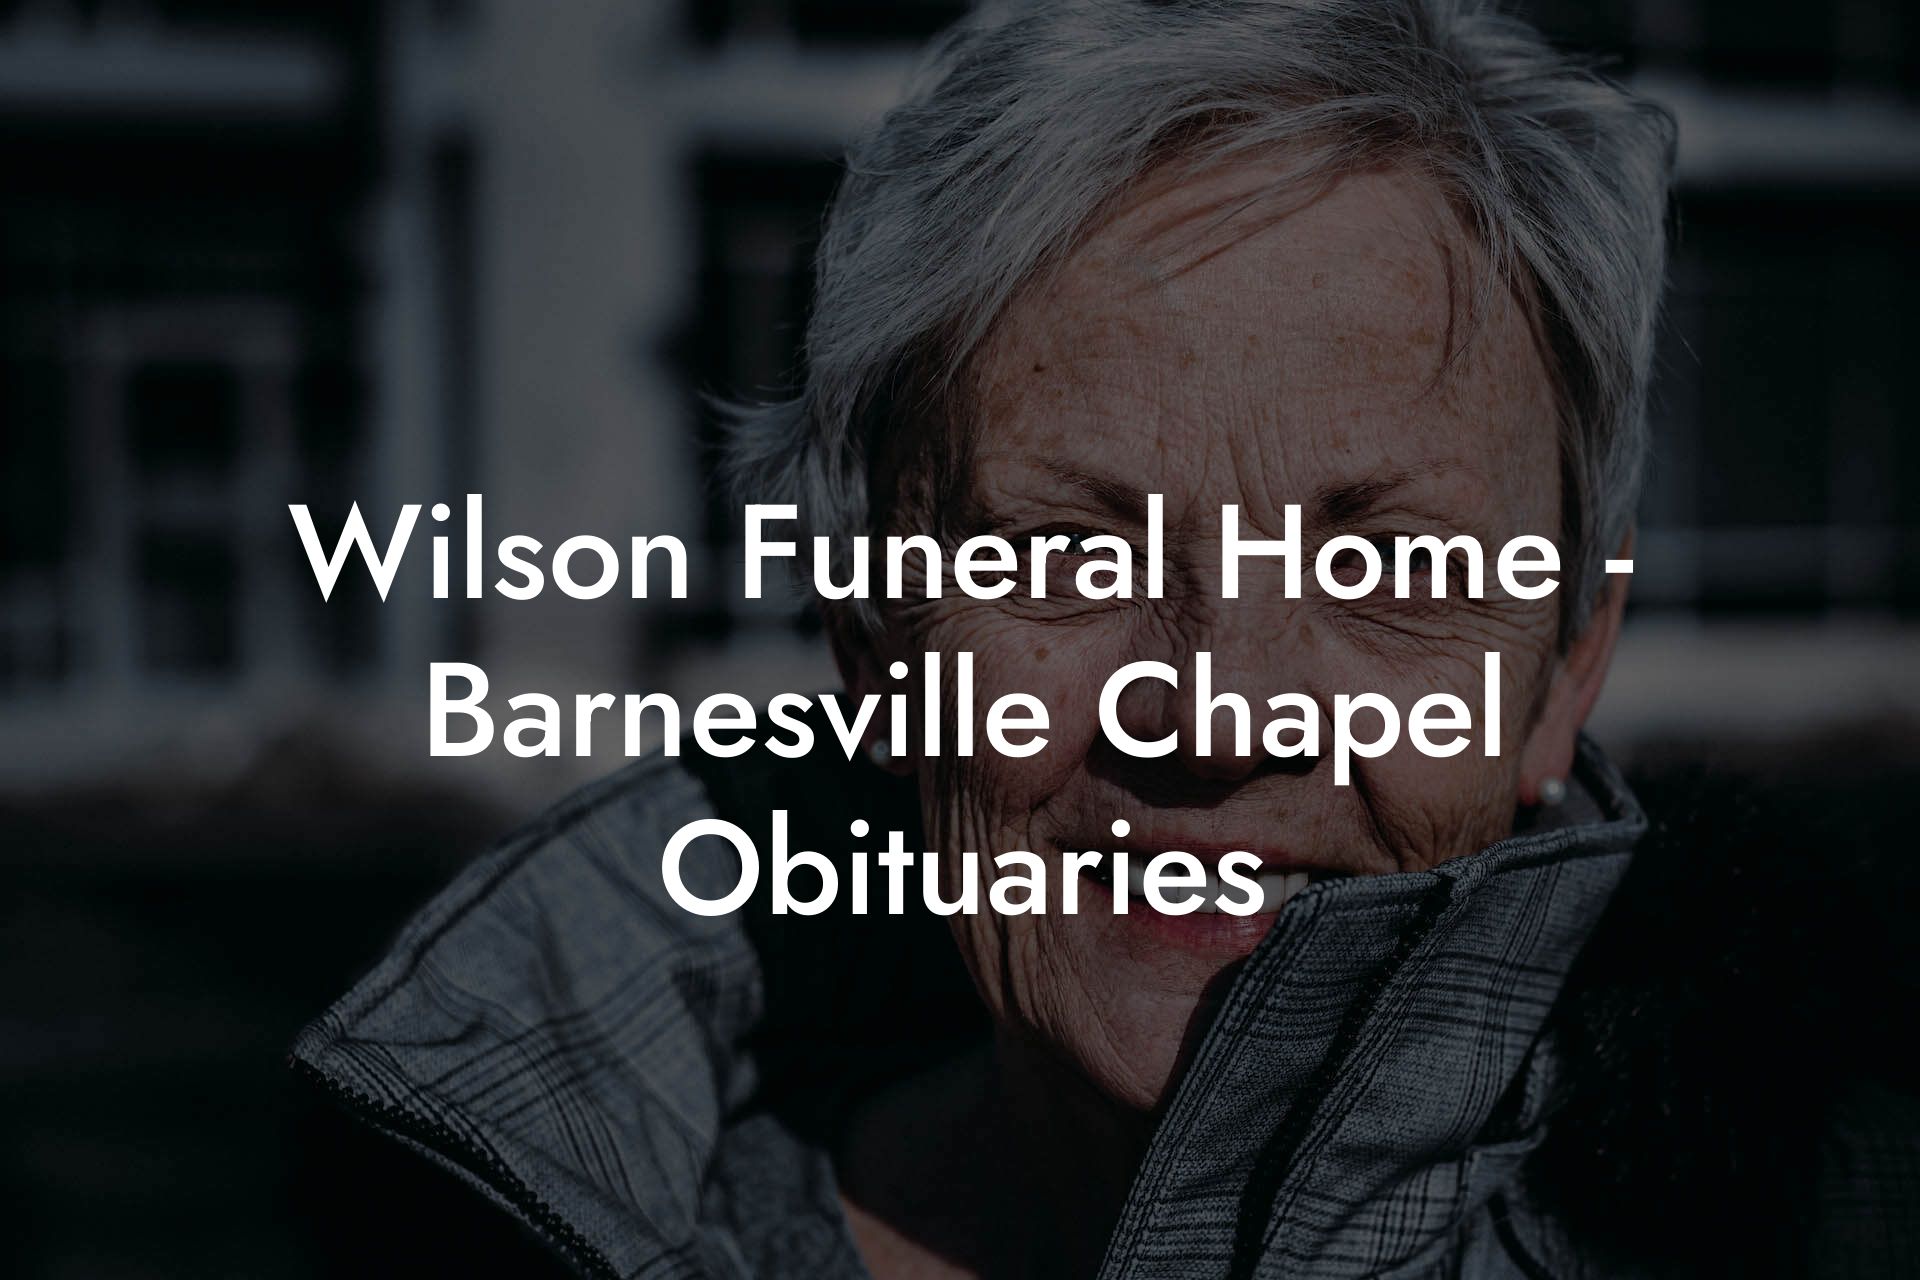 Wilson Funeral Home - Barnesville Chapel Obituaries